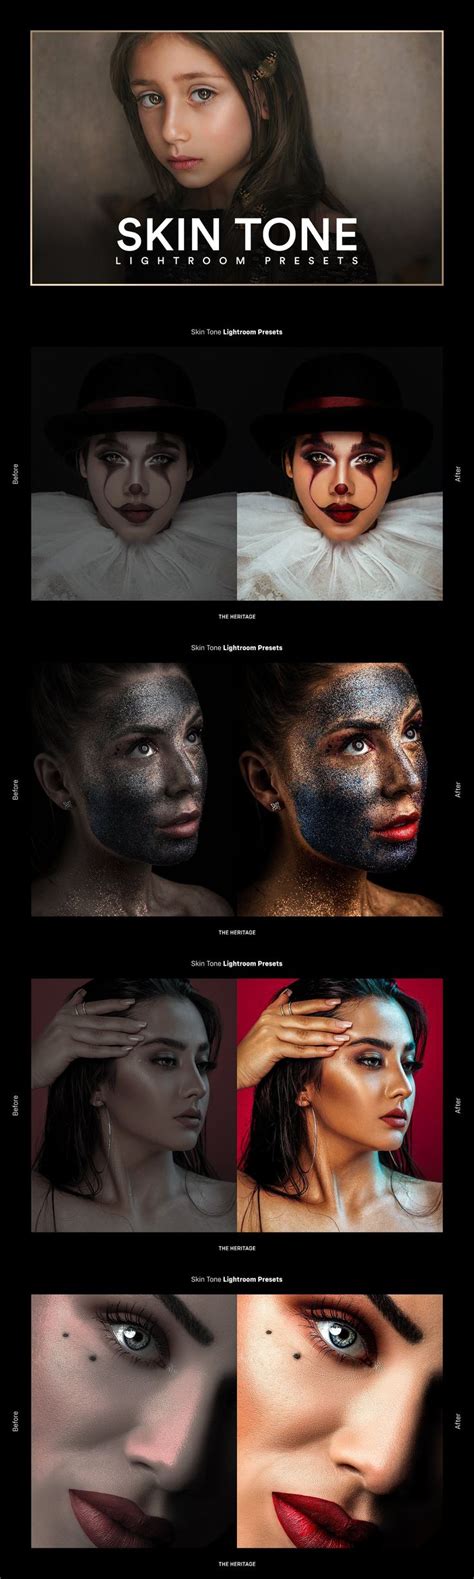 Skin Tone I Lightroom Presets Photoshop Actions Skin Tones